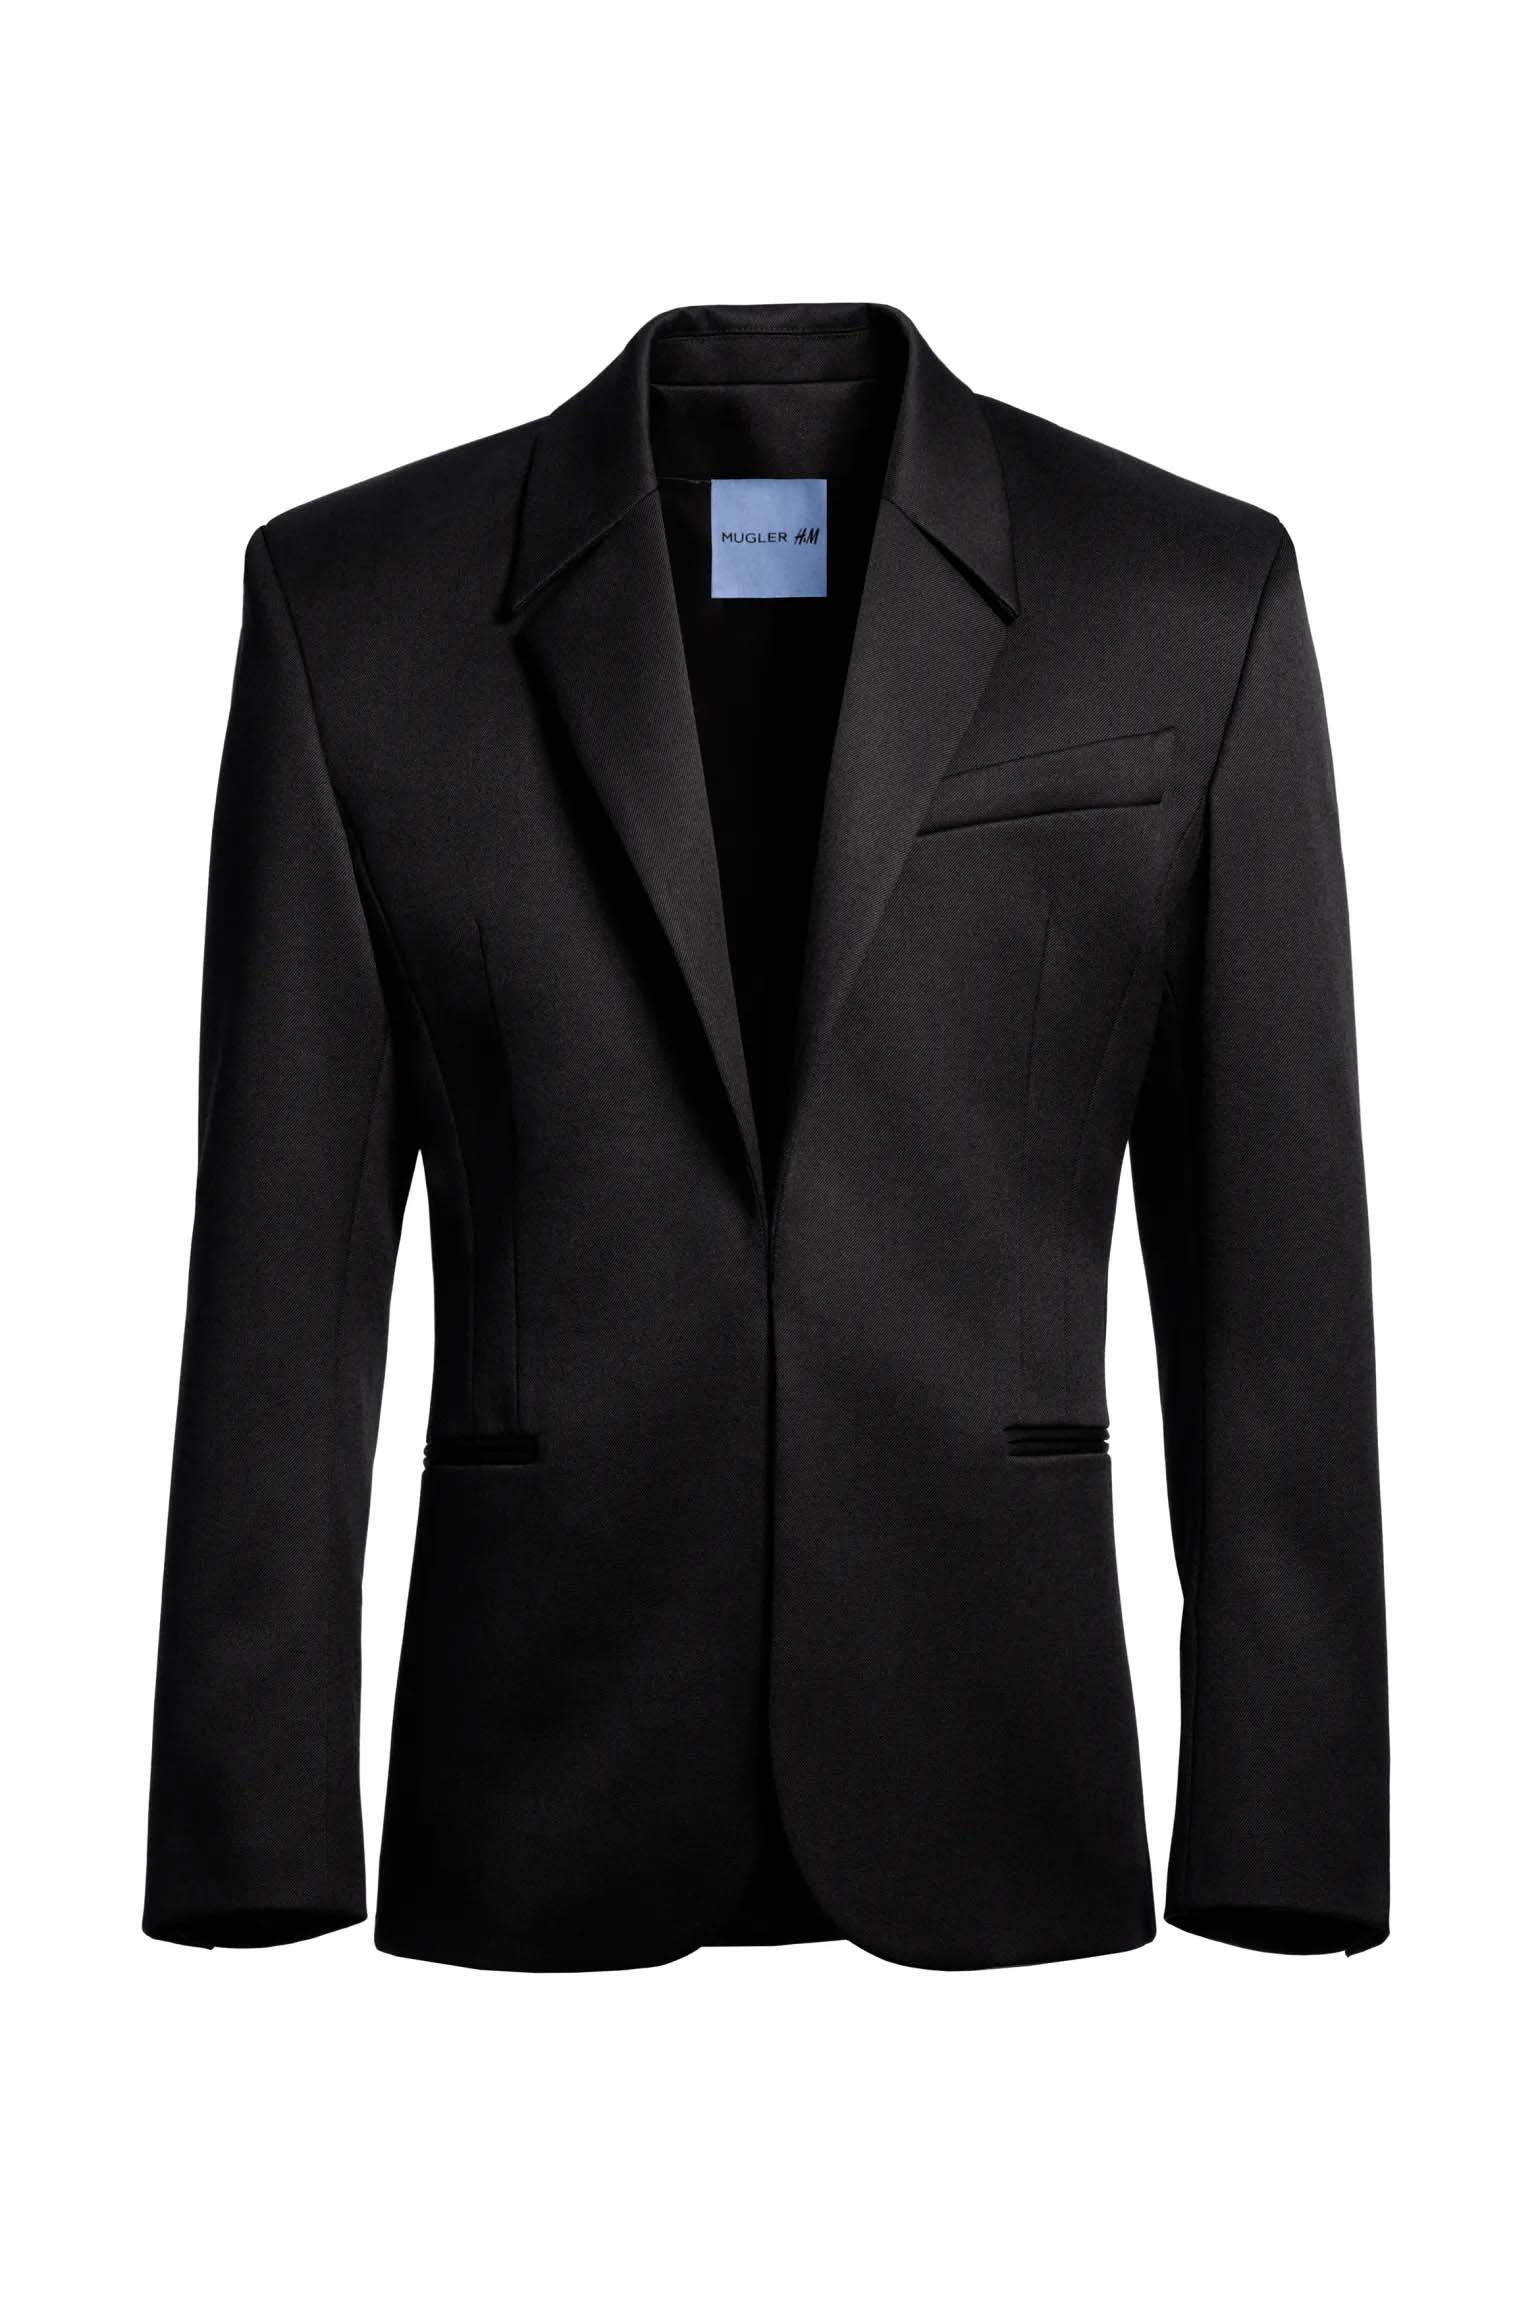 Mugler H&M Corset-Style Wool Jacket Black - SS23 - US